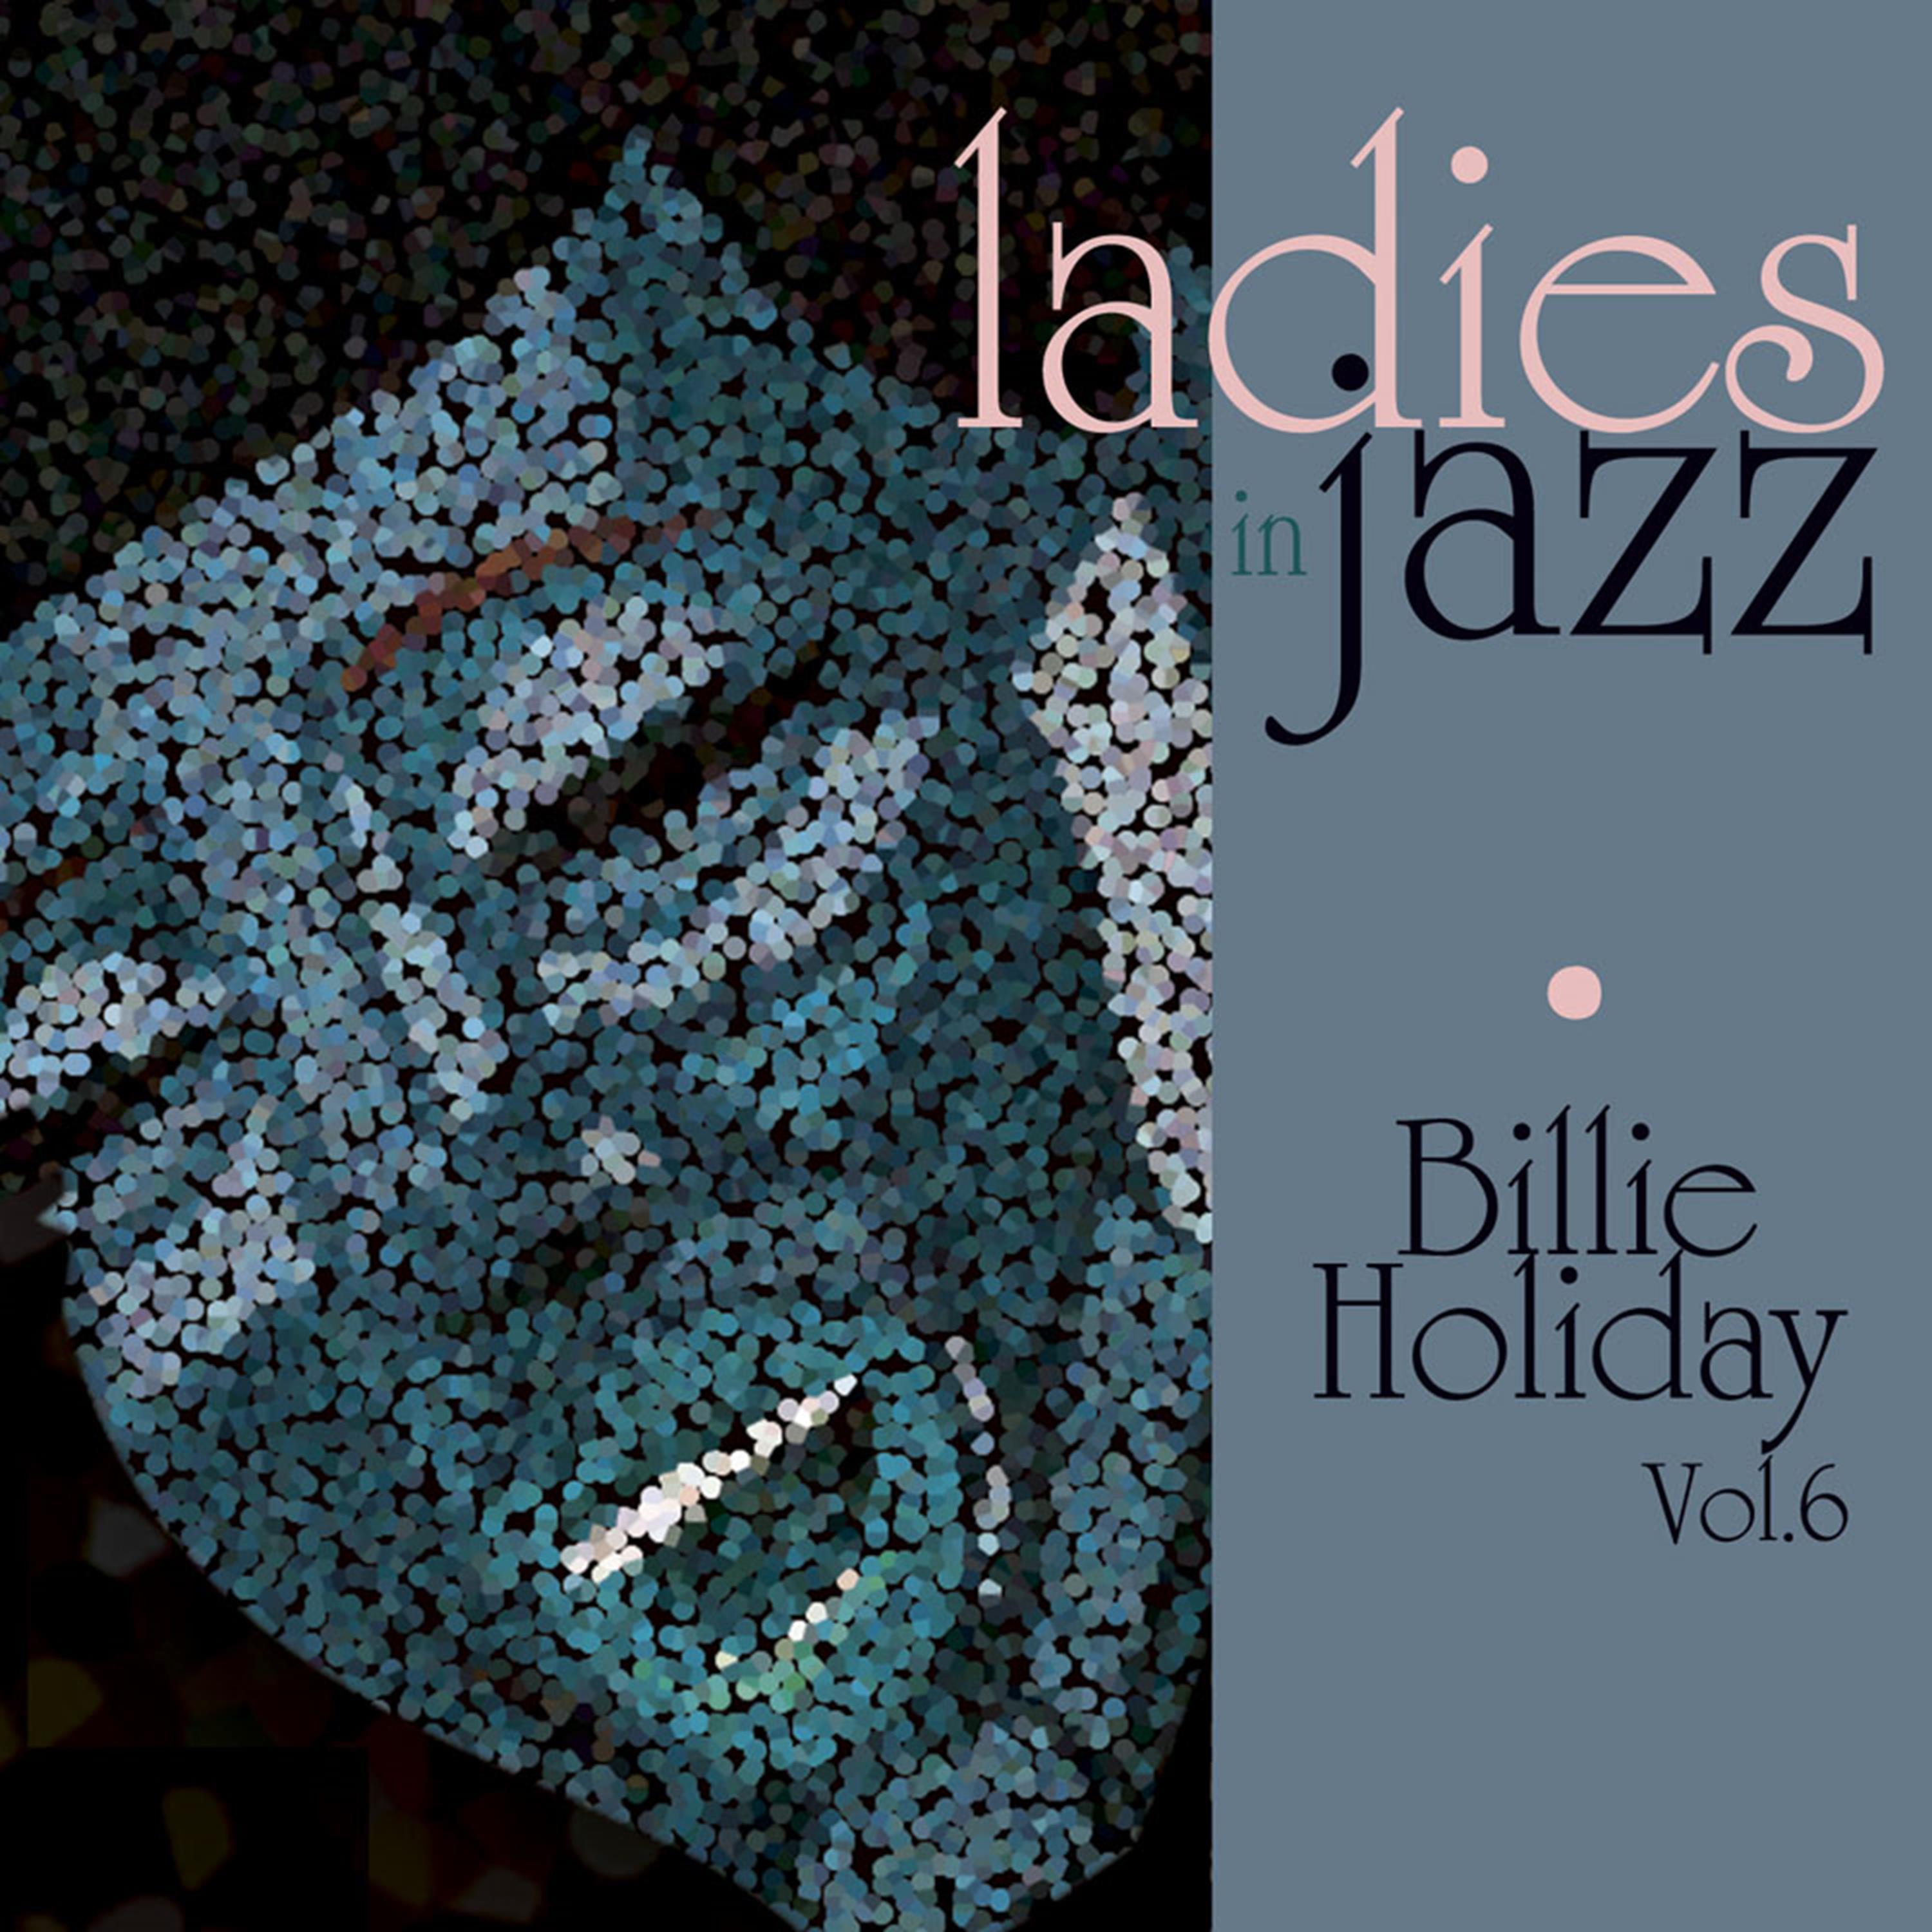 Ladies in Jazz - Billie Holiday, Vol. 6